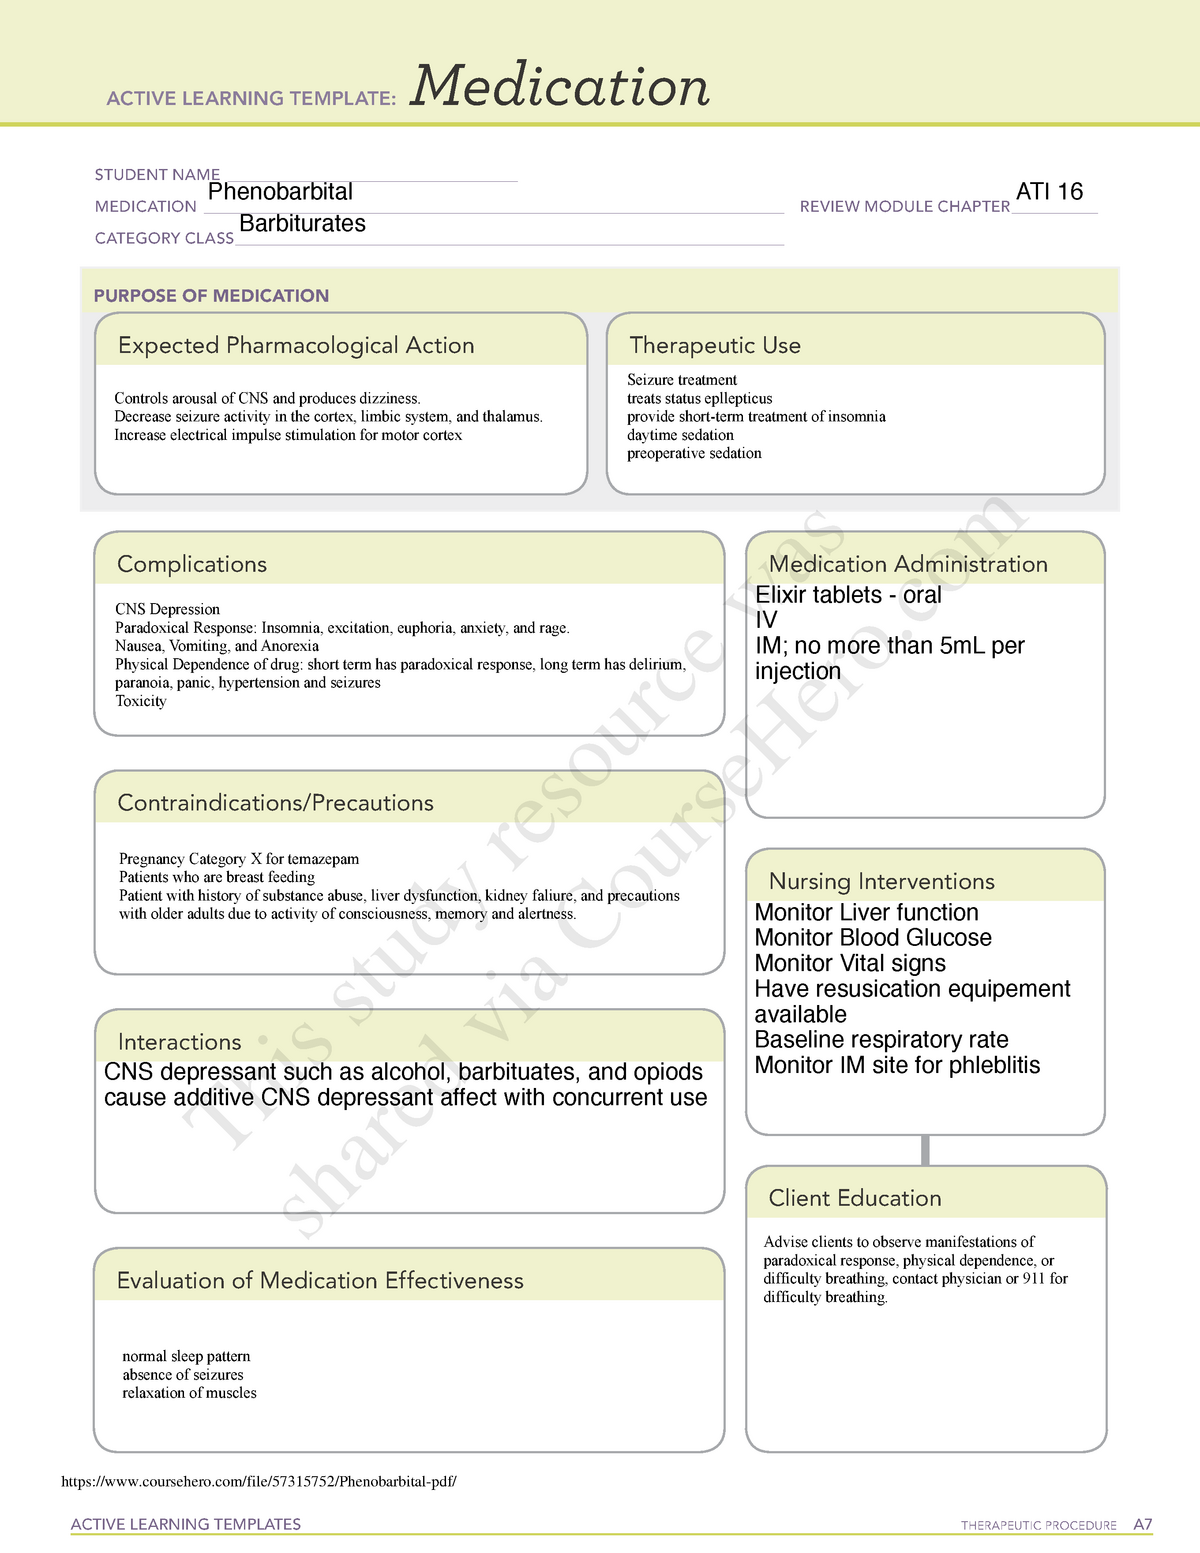 phenobarbital-pdf-copy-active-learning-templates-therapeutic